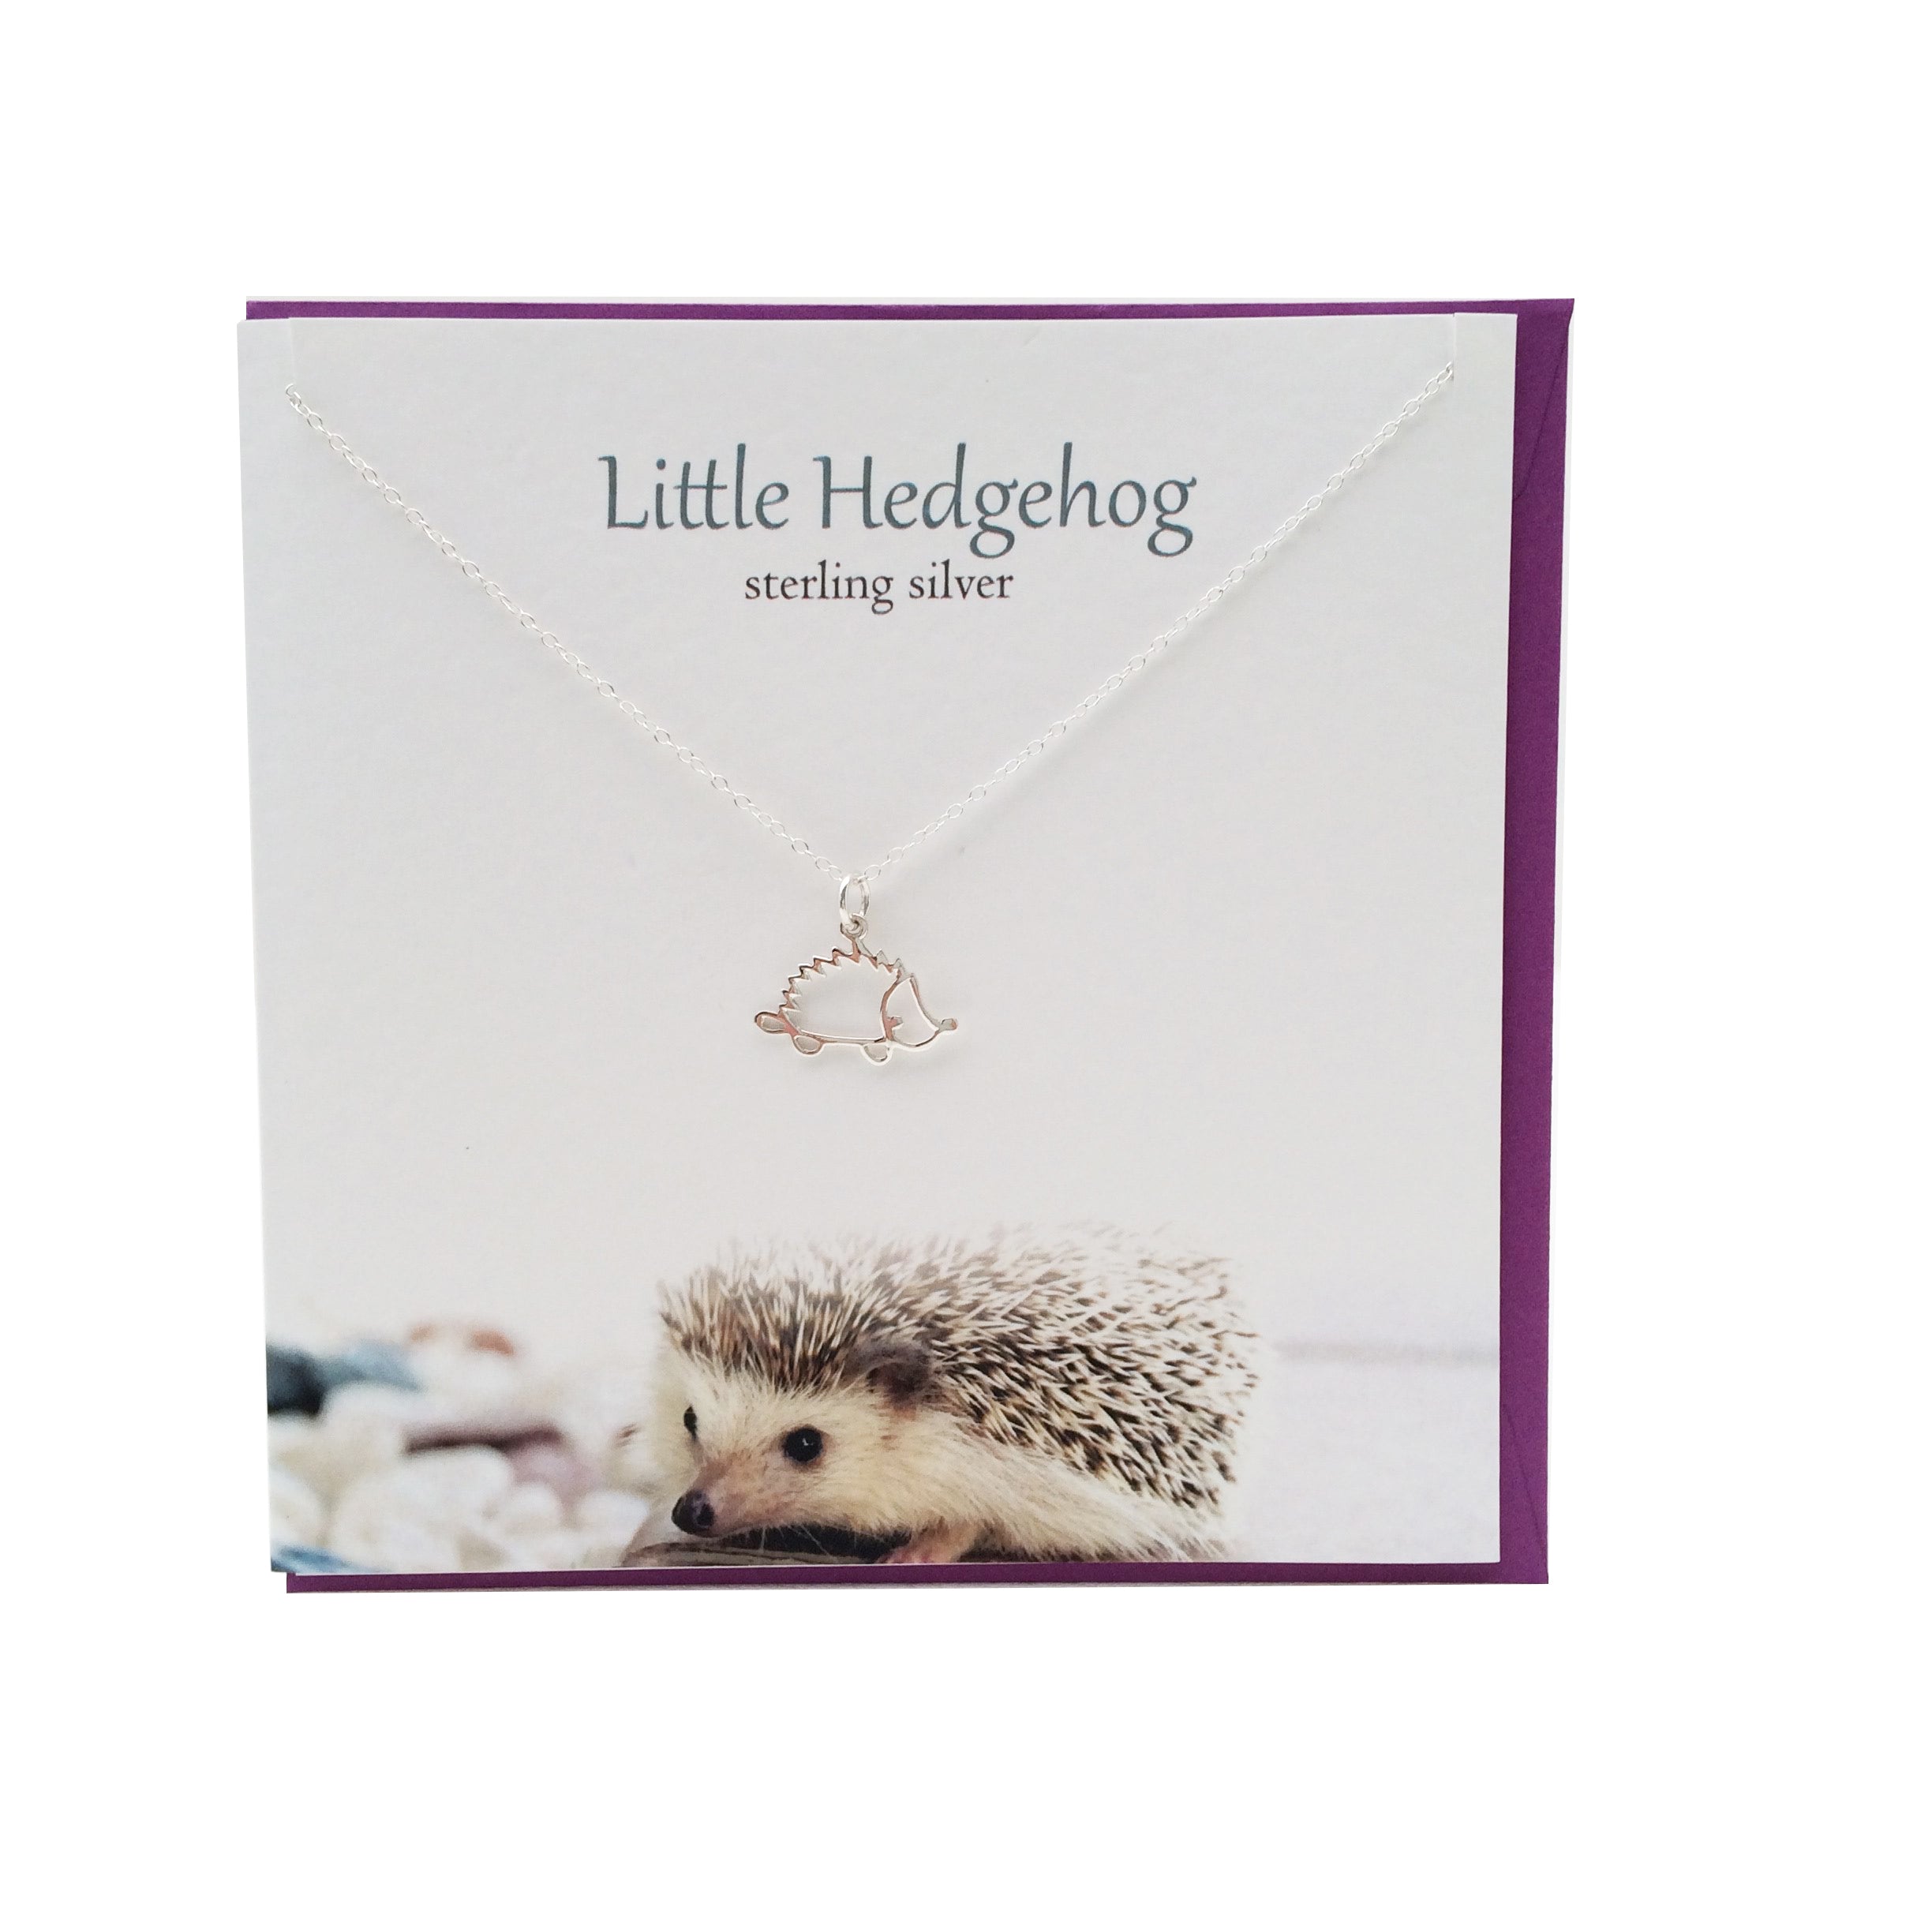 Little Hedgehog silver necklace | The Silver Studio Scotland